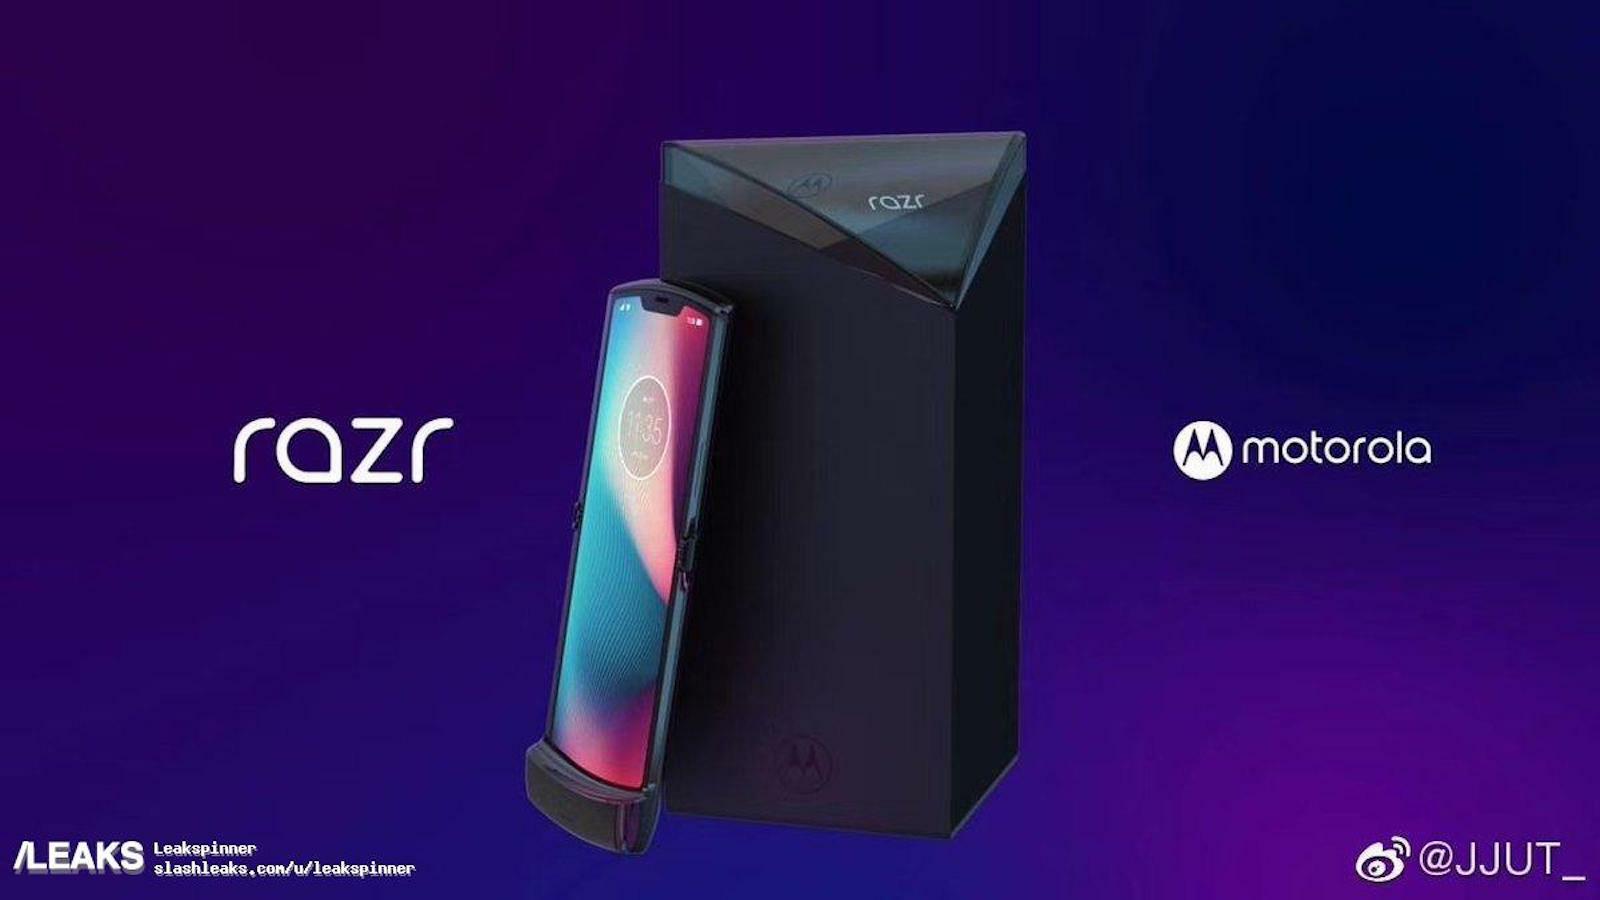 What will the Motorola RAZR V4 look like?